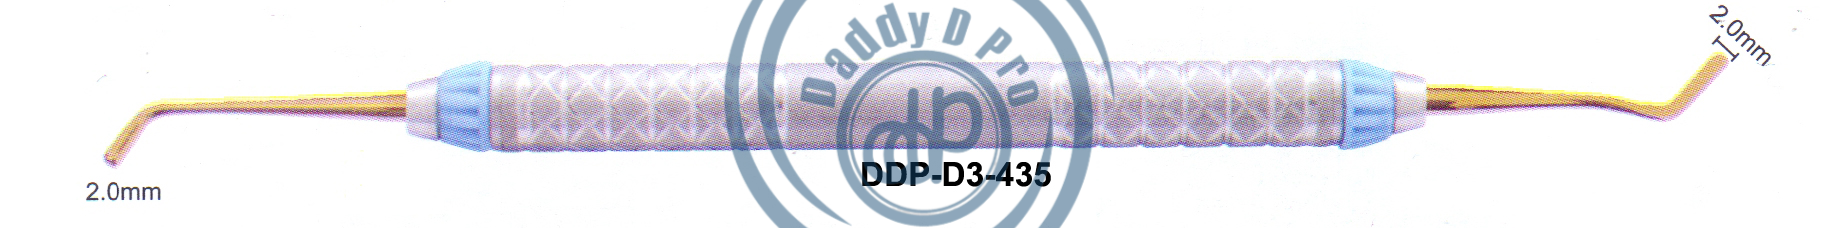 images/DDP-D3-435.png